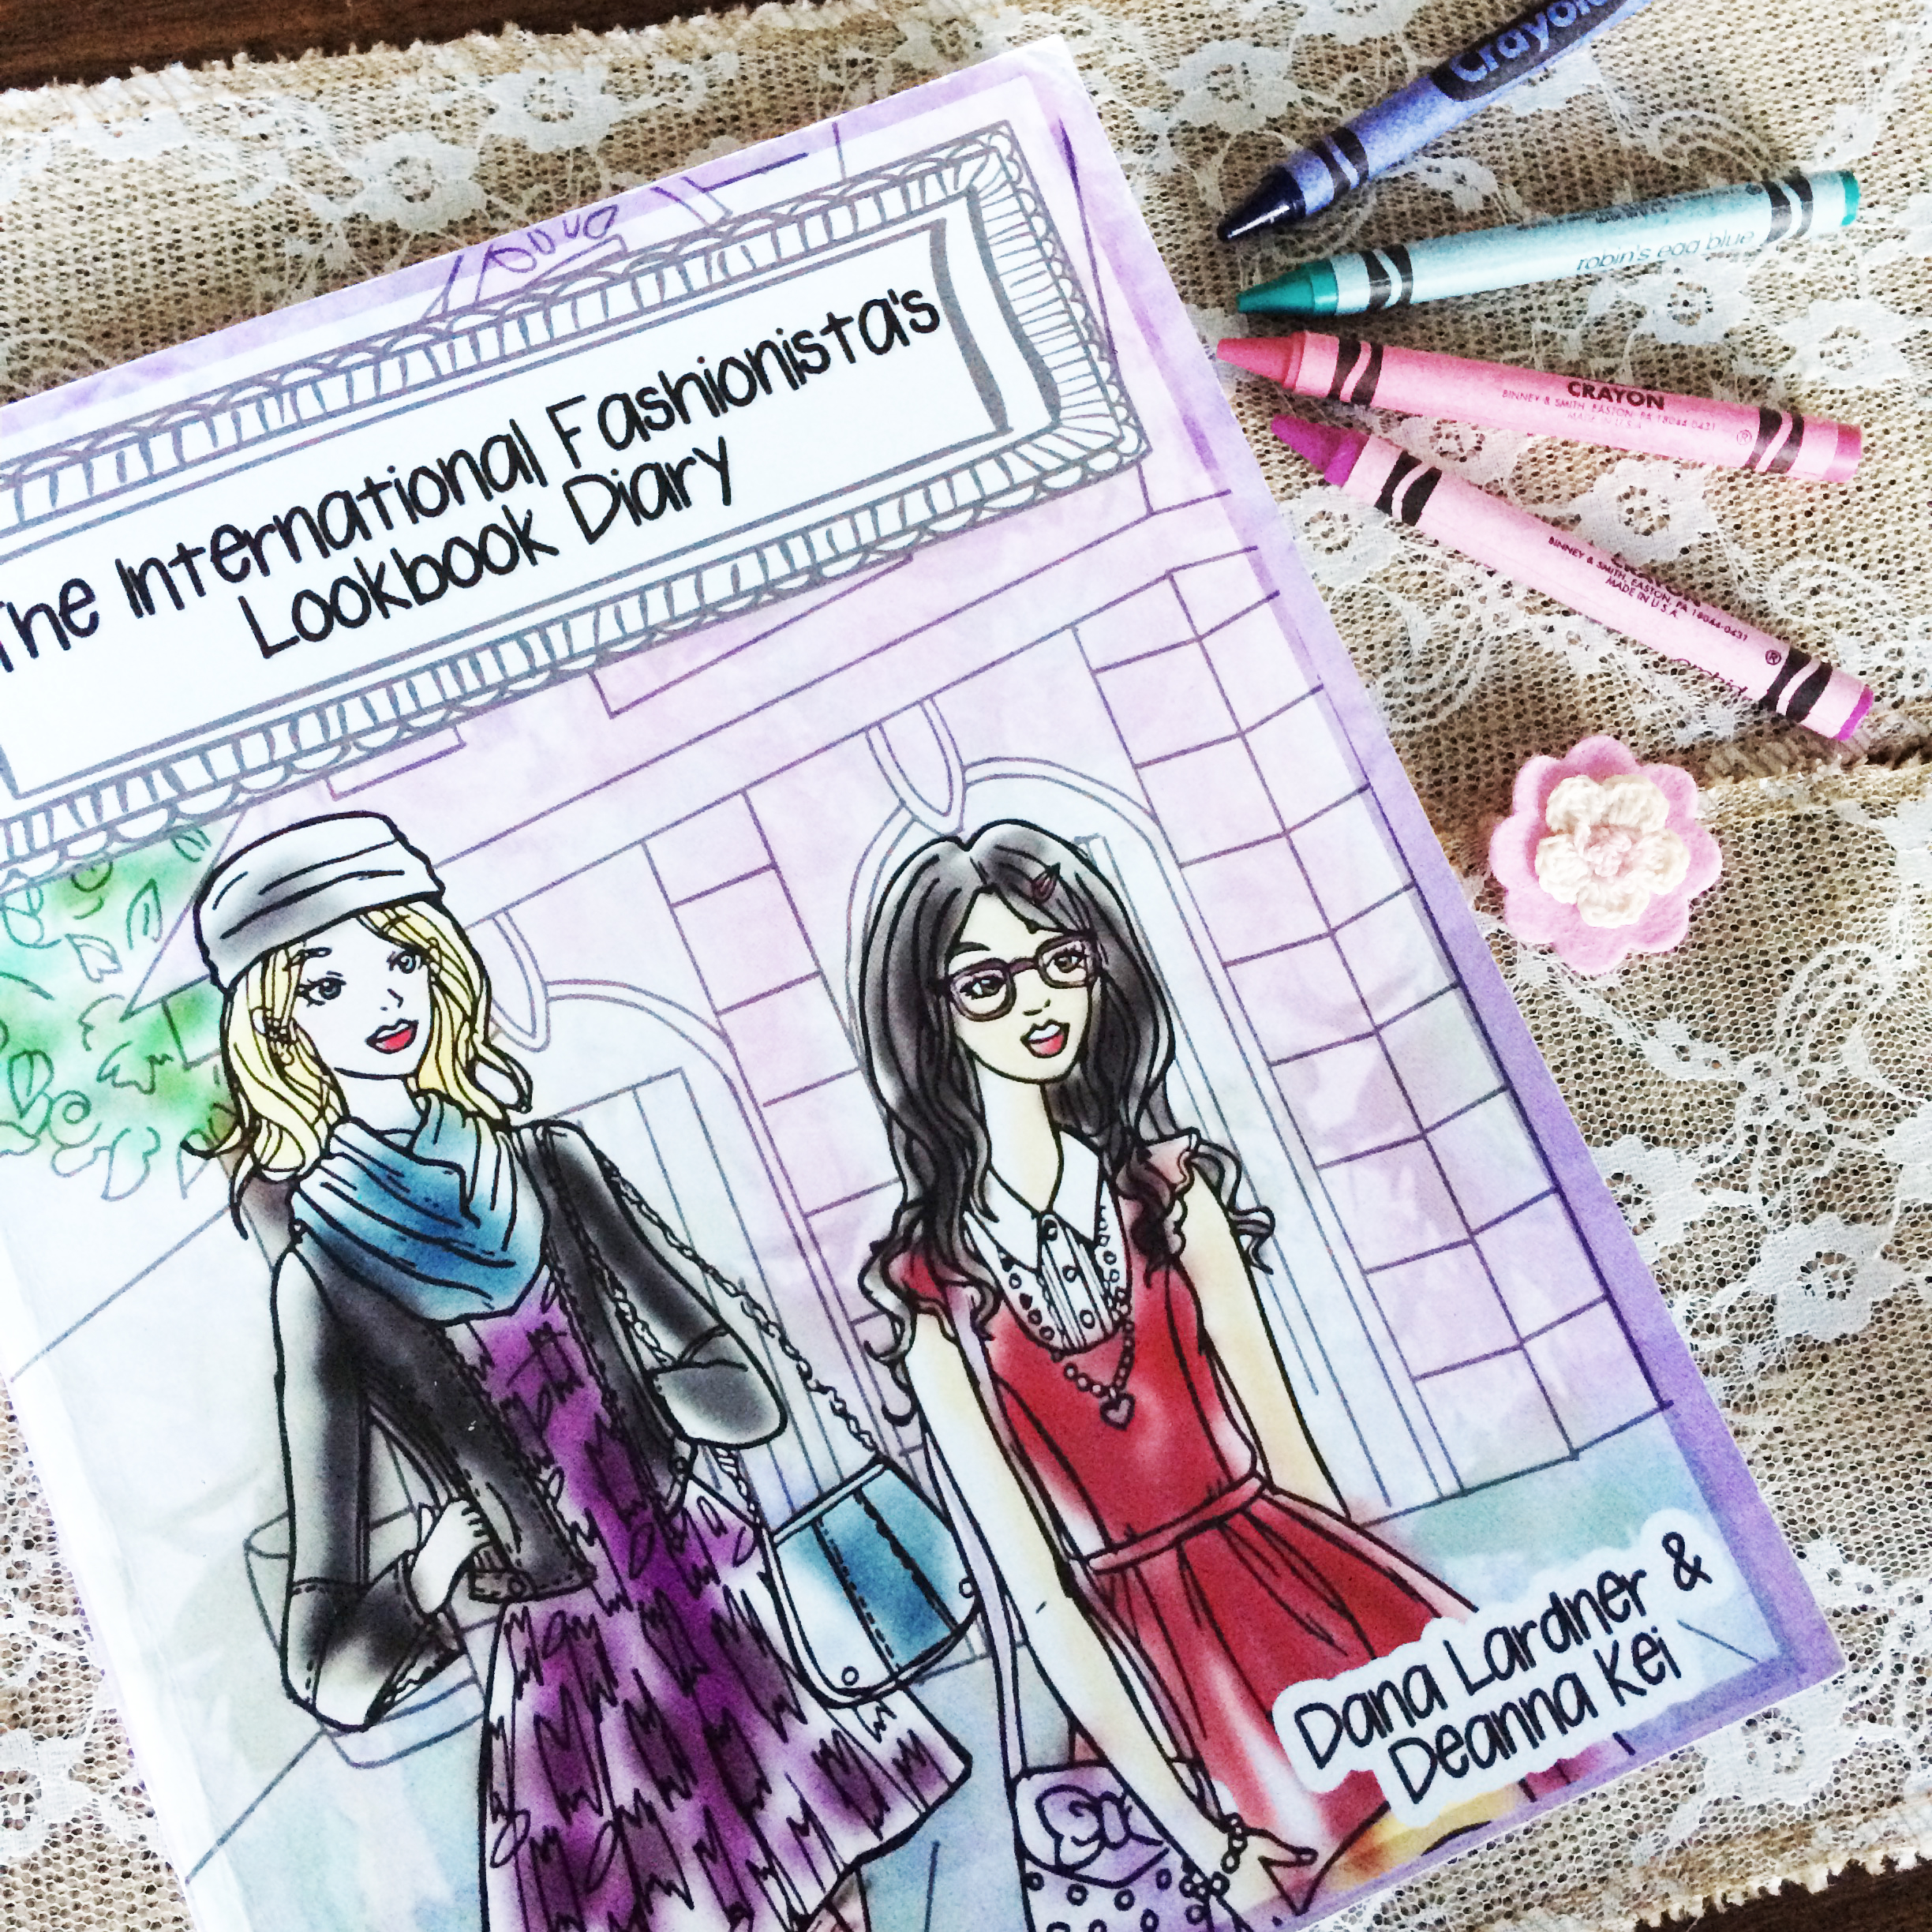 The International Fashionista's Lookbook Diary